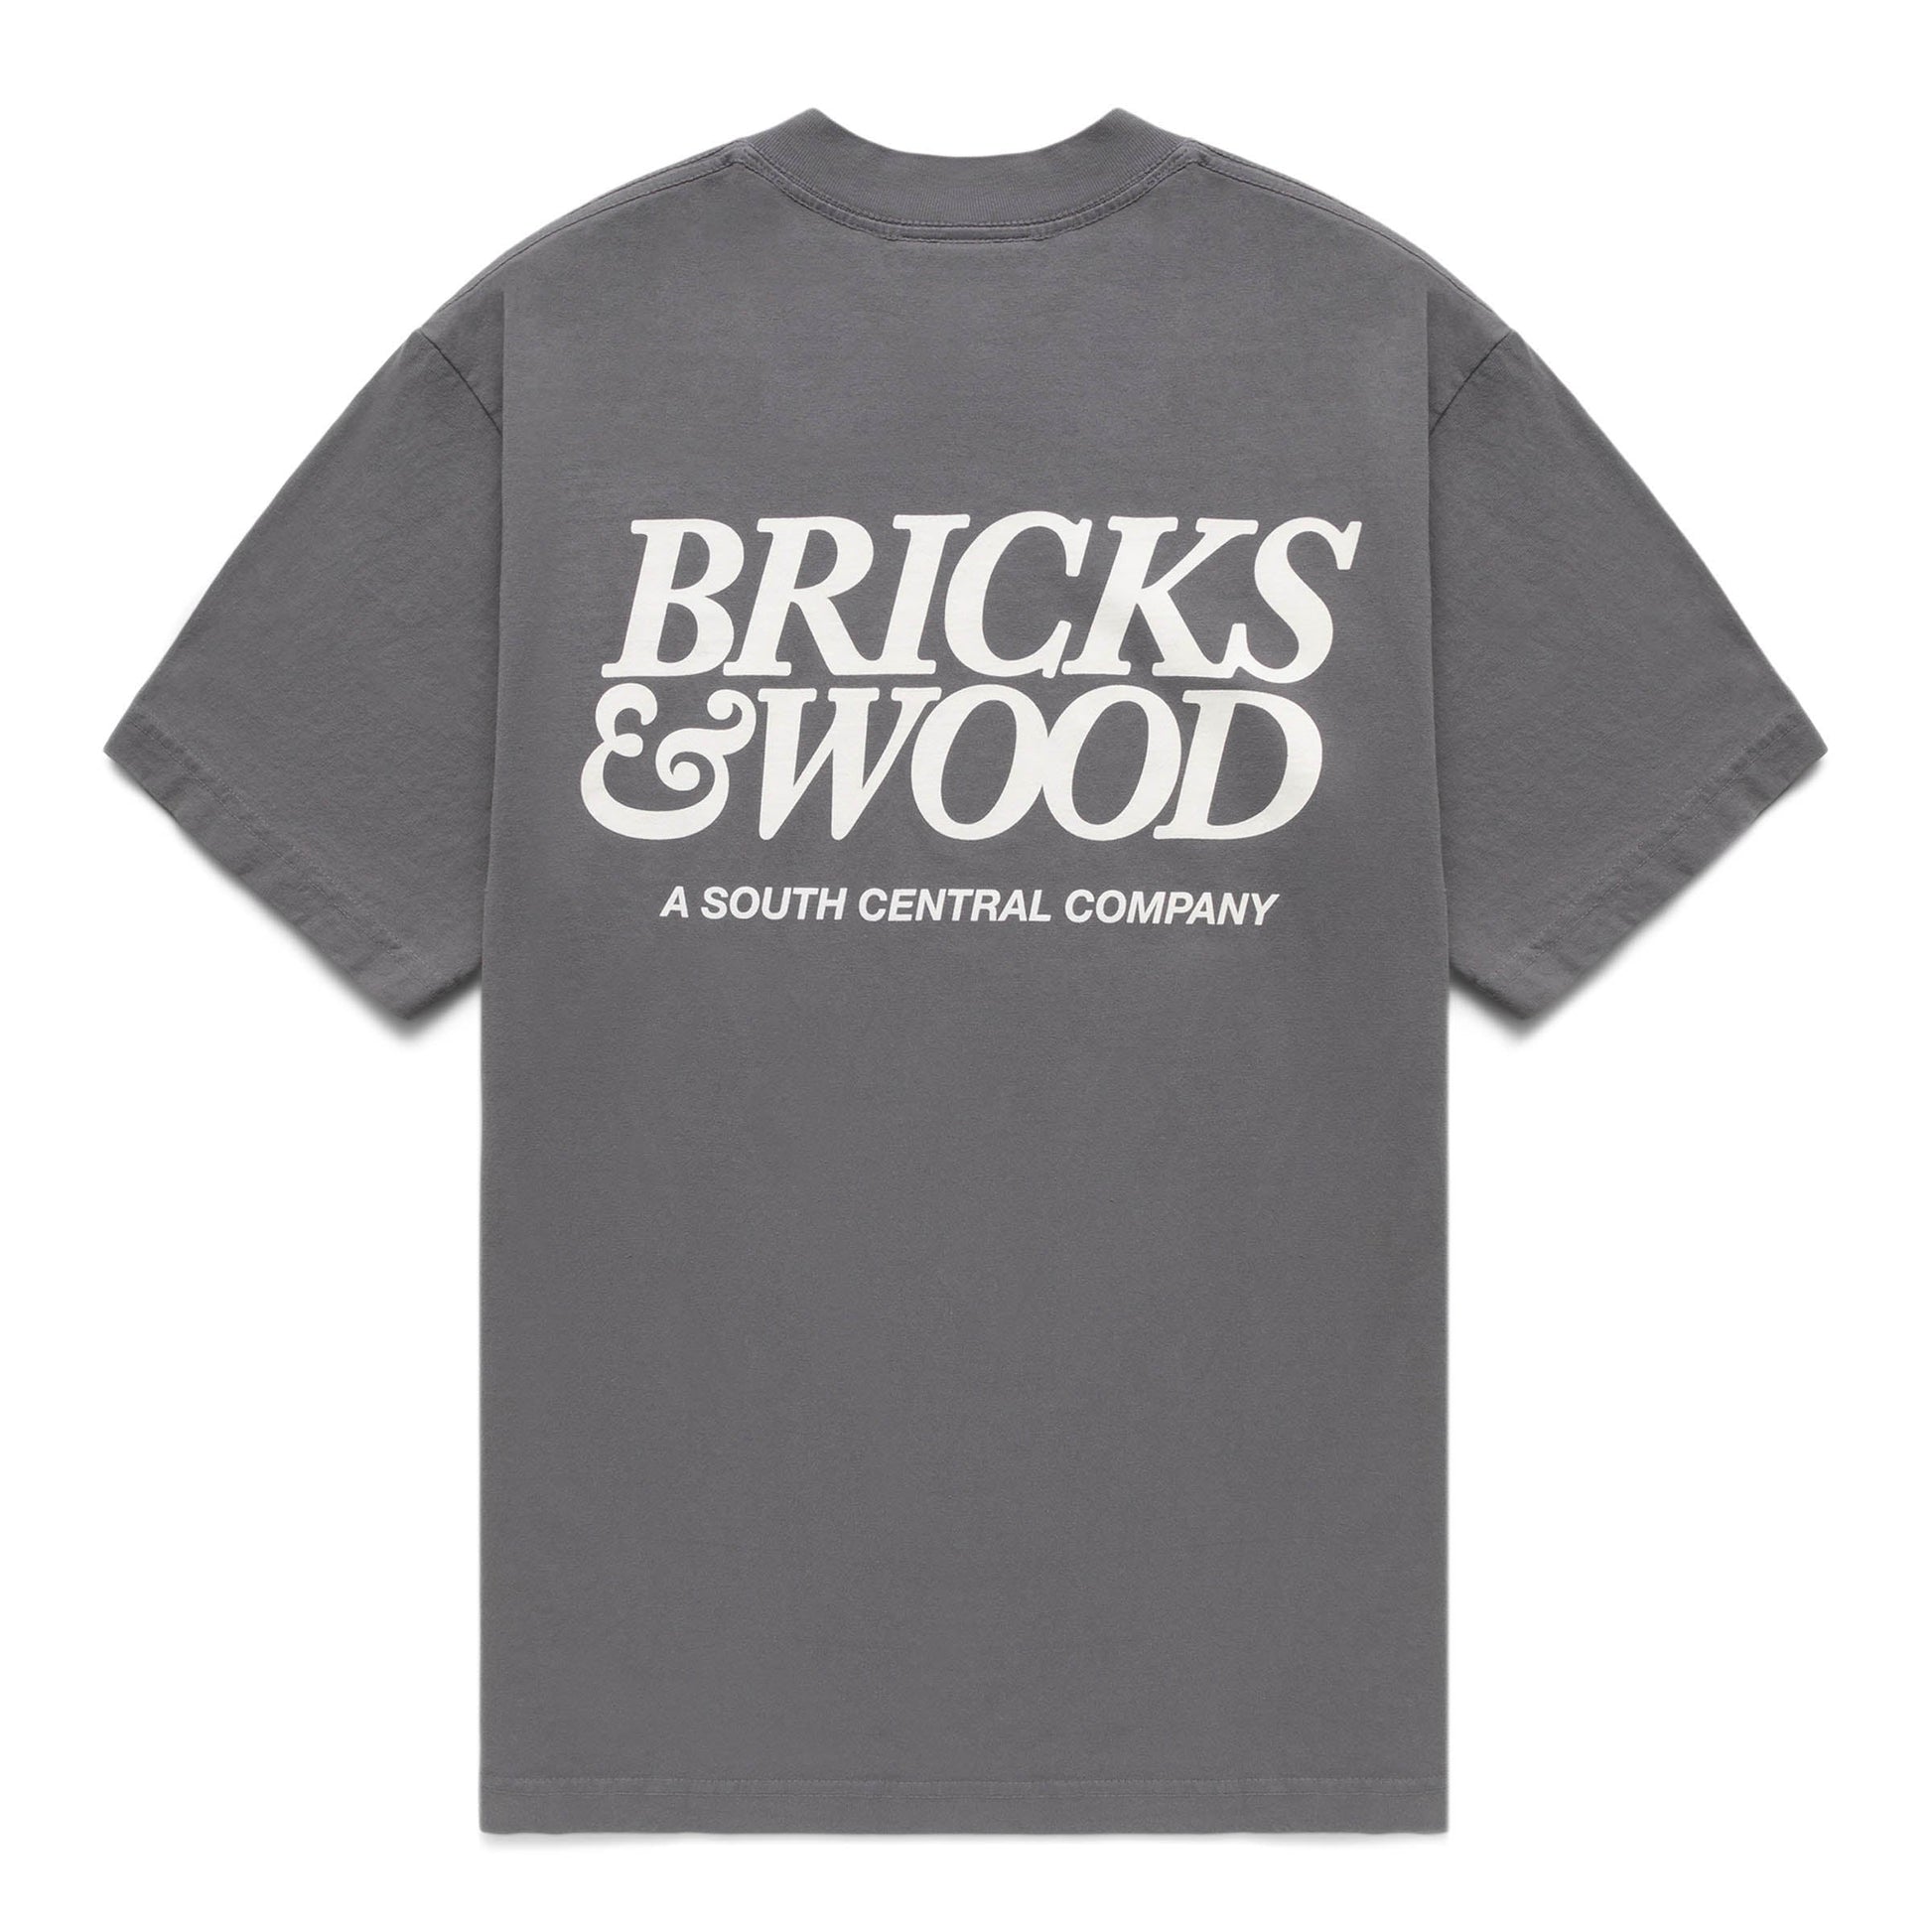  Bricks & Wood A SOUTH CENTRAL COMPANY T-SHIRT CHARCOAL 